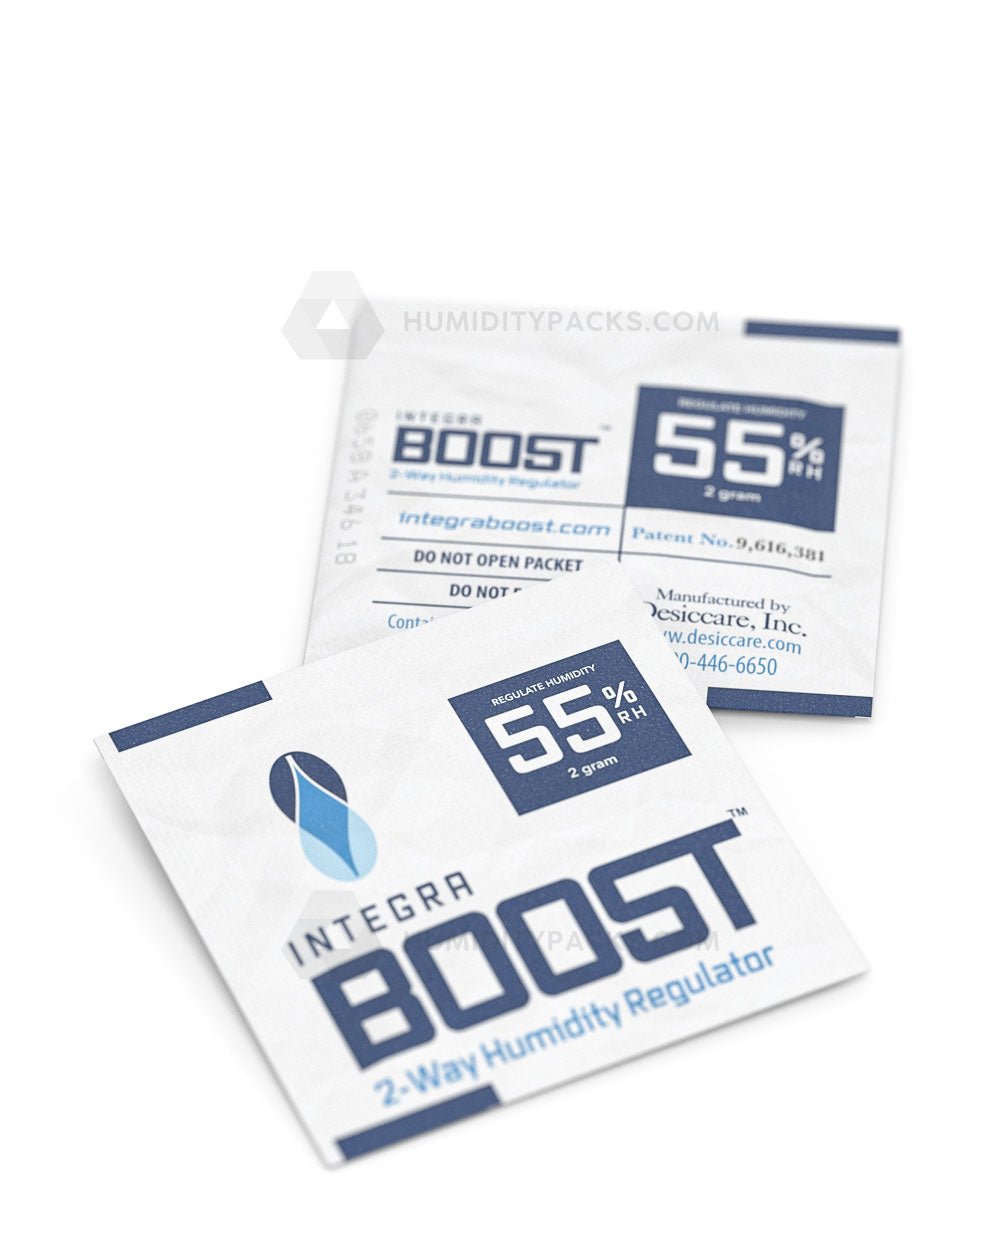 Integra Boost 2 Gram 55% 2-Way Humidity Packs 100/Box Humidity Packs - 5